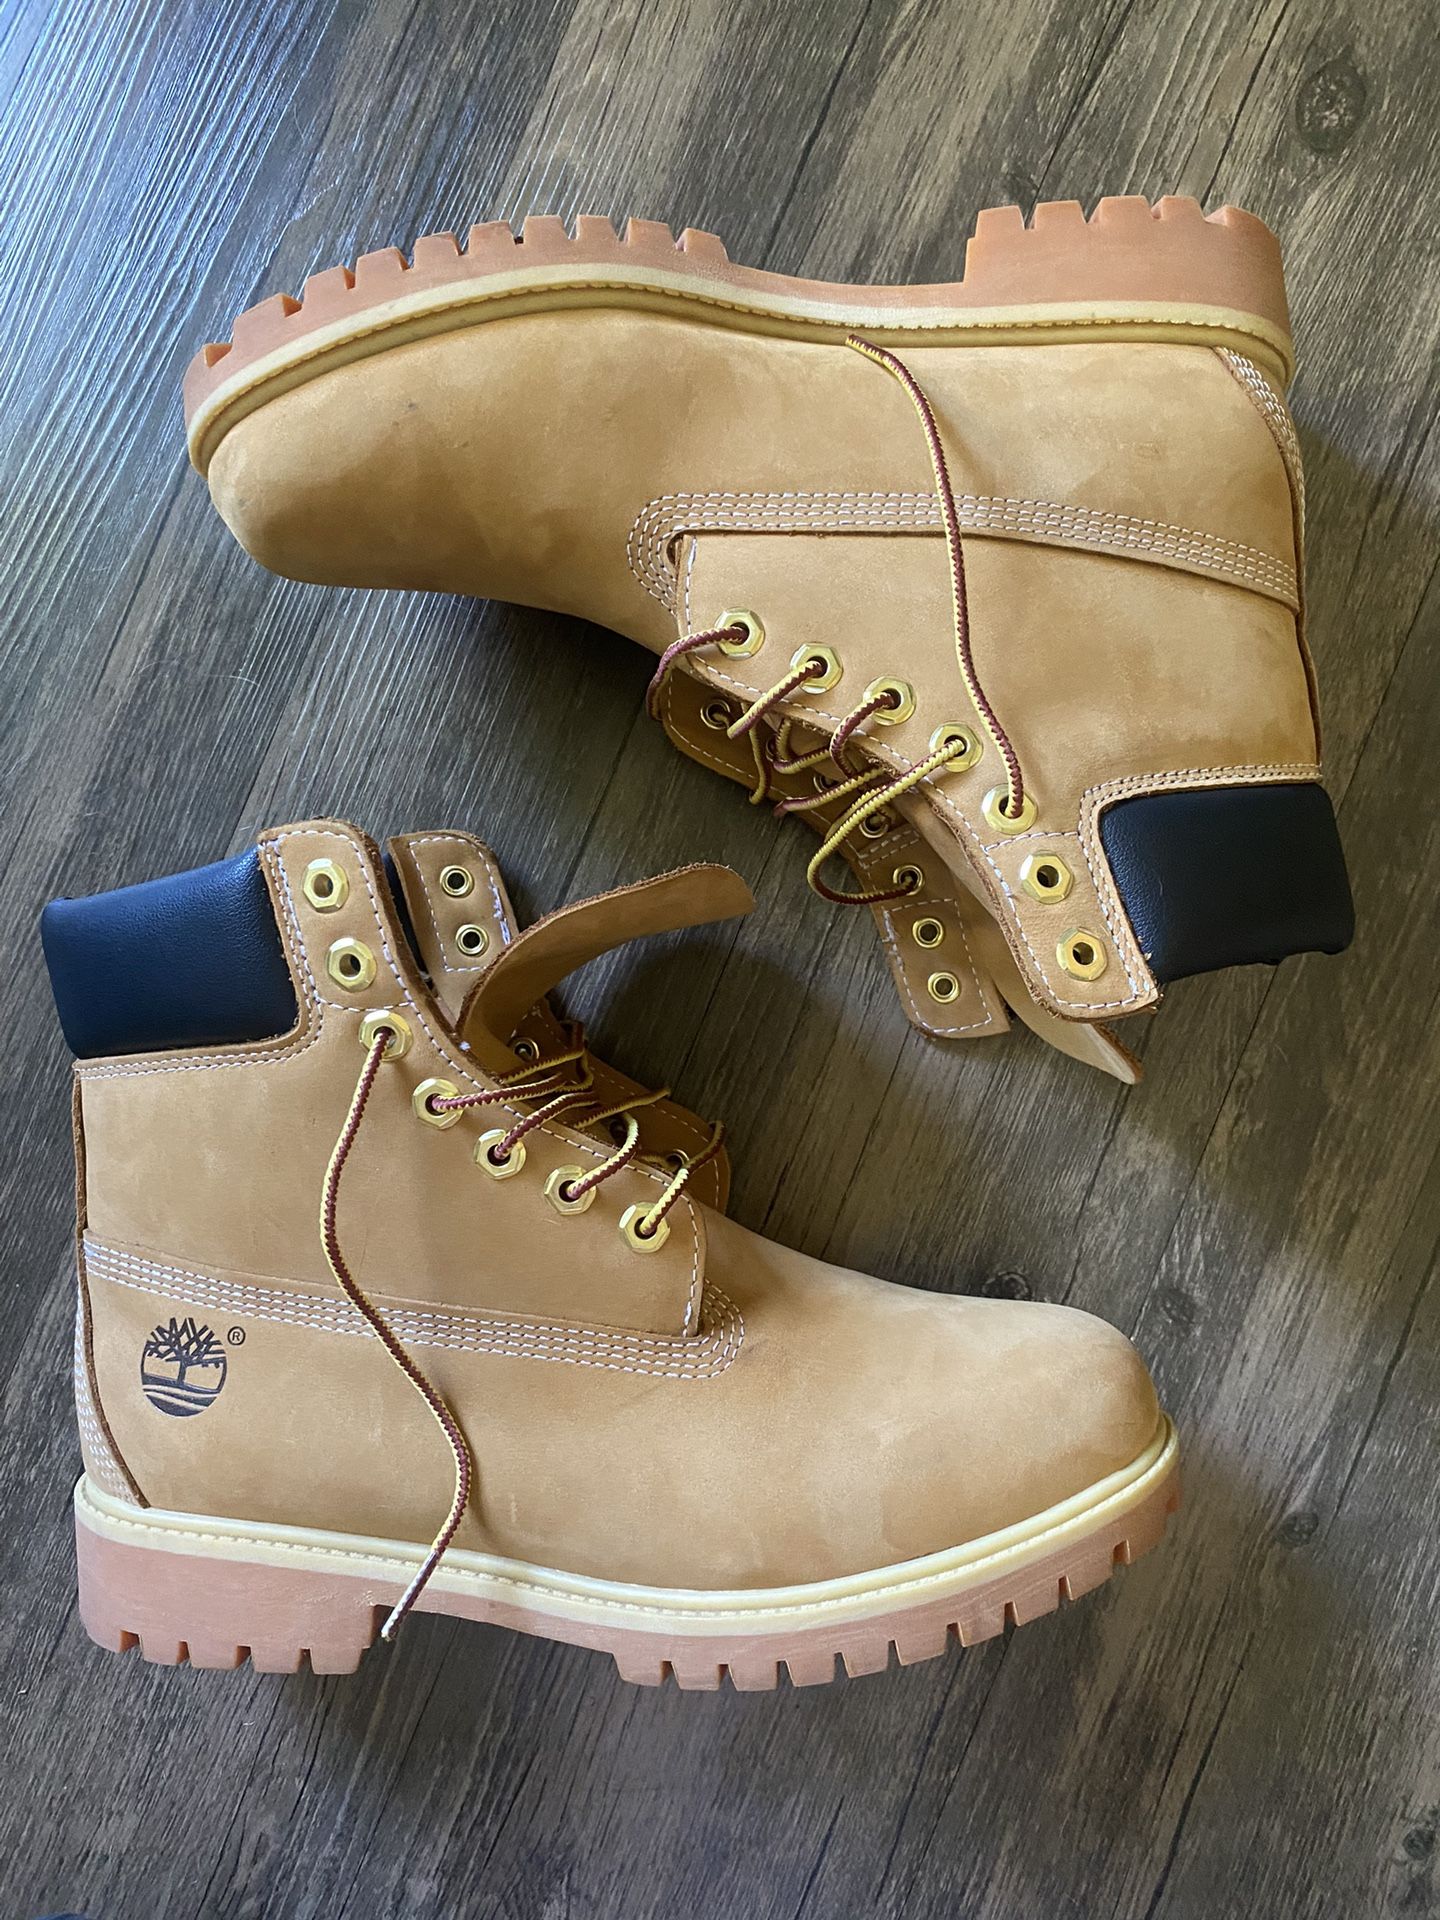 TimberLand Boots Size 8.5